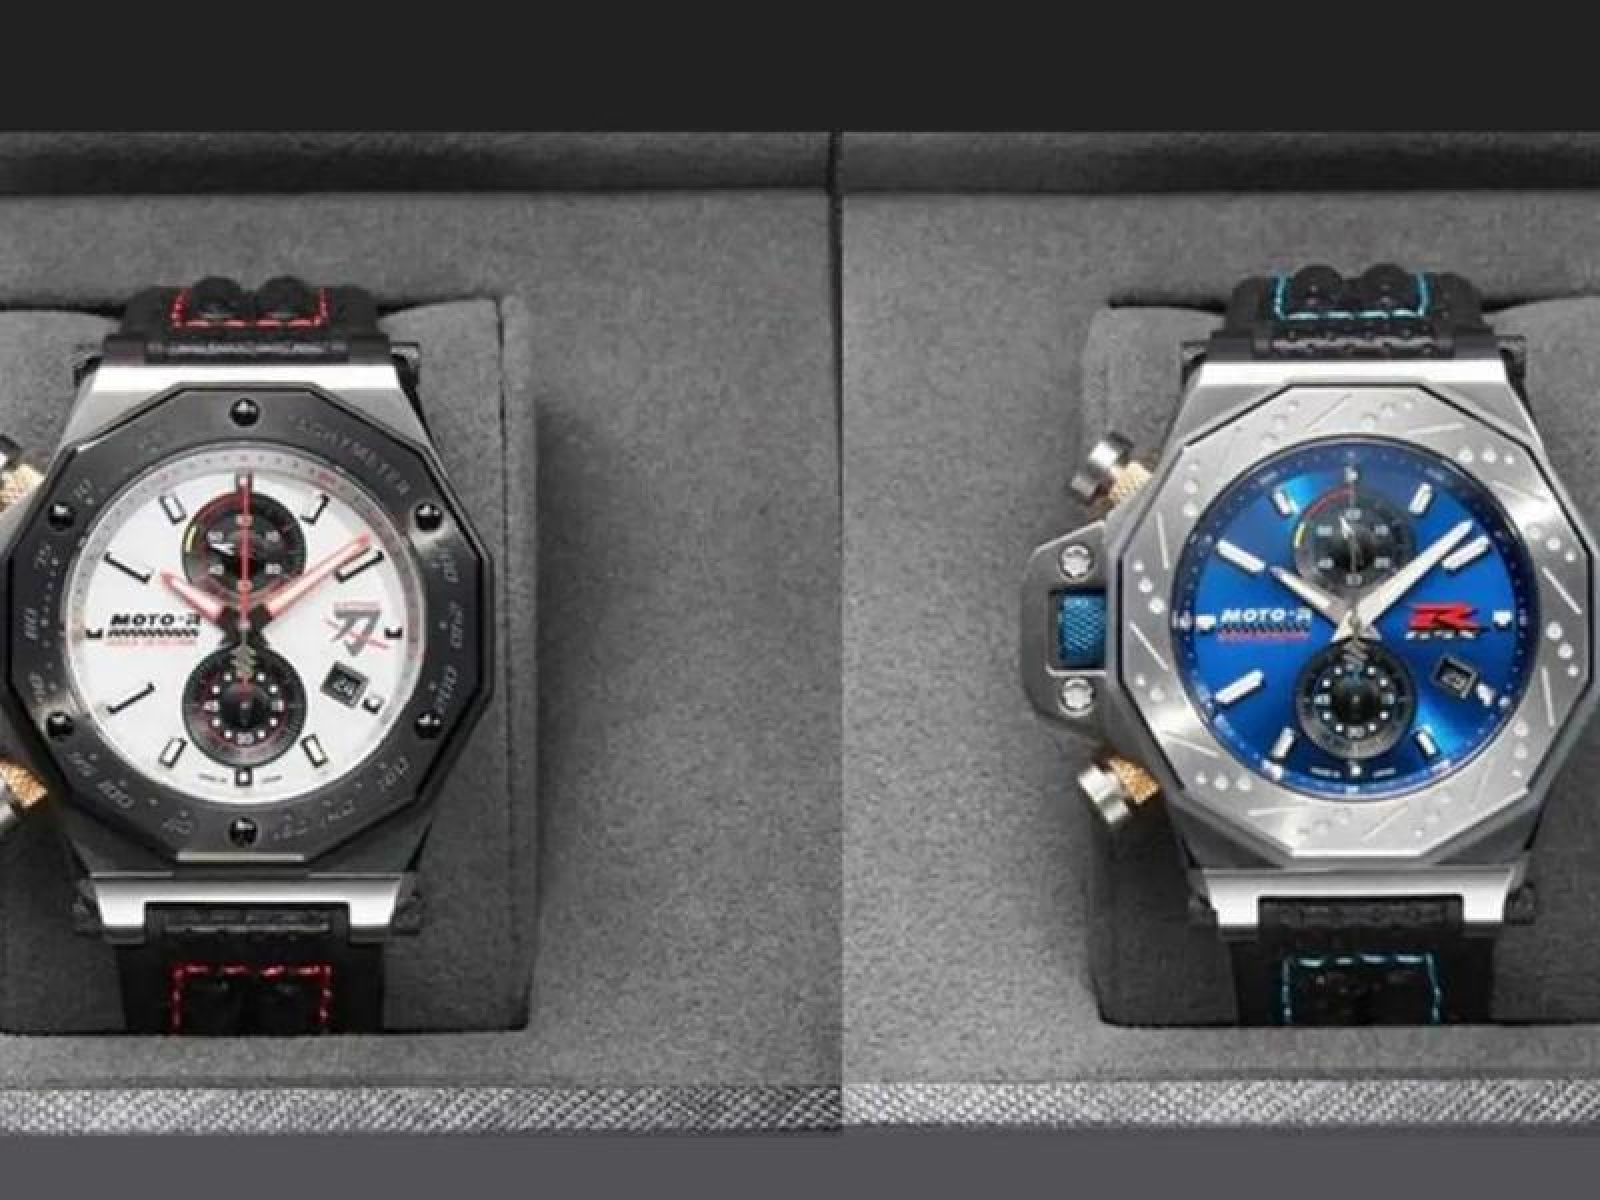 Suzuki i Kentex predstavili Katana i GSX-R satove